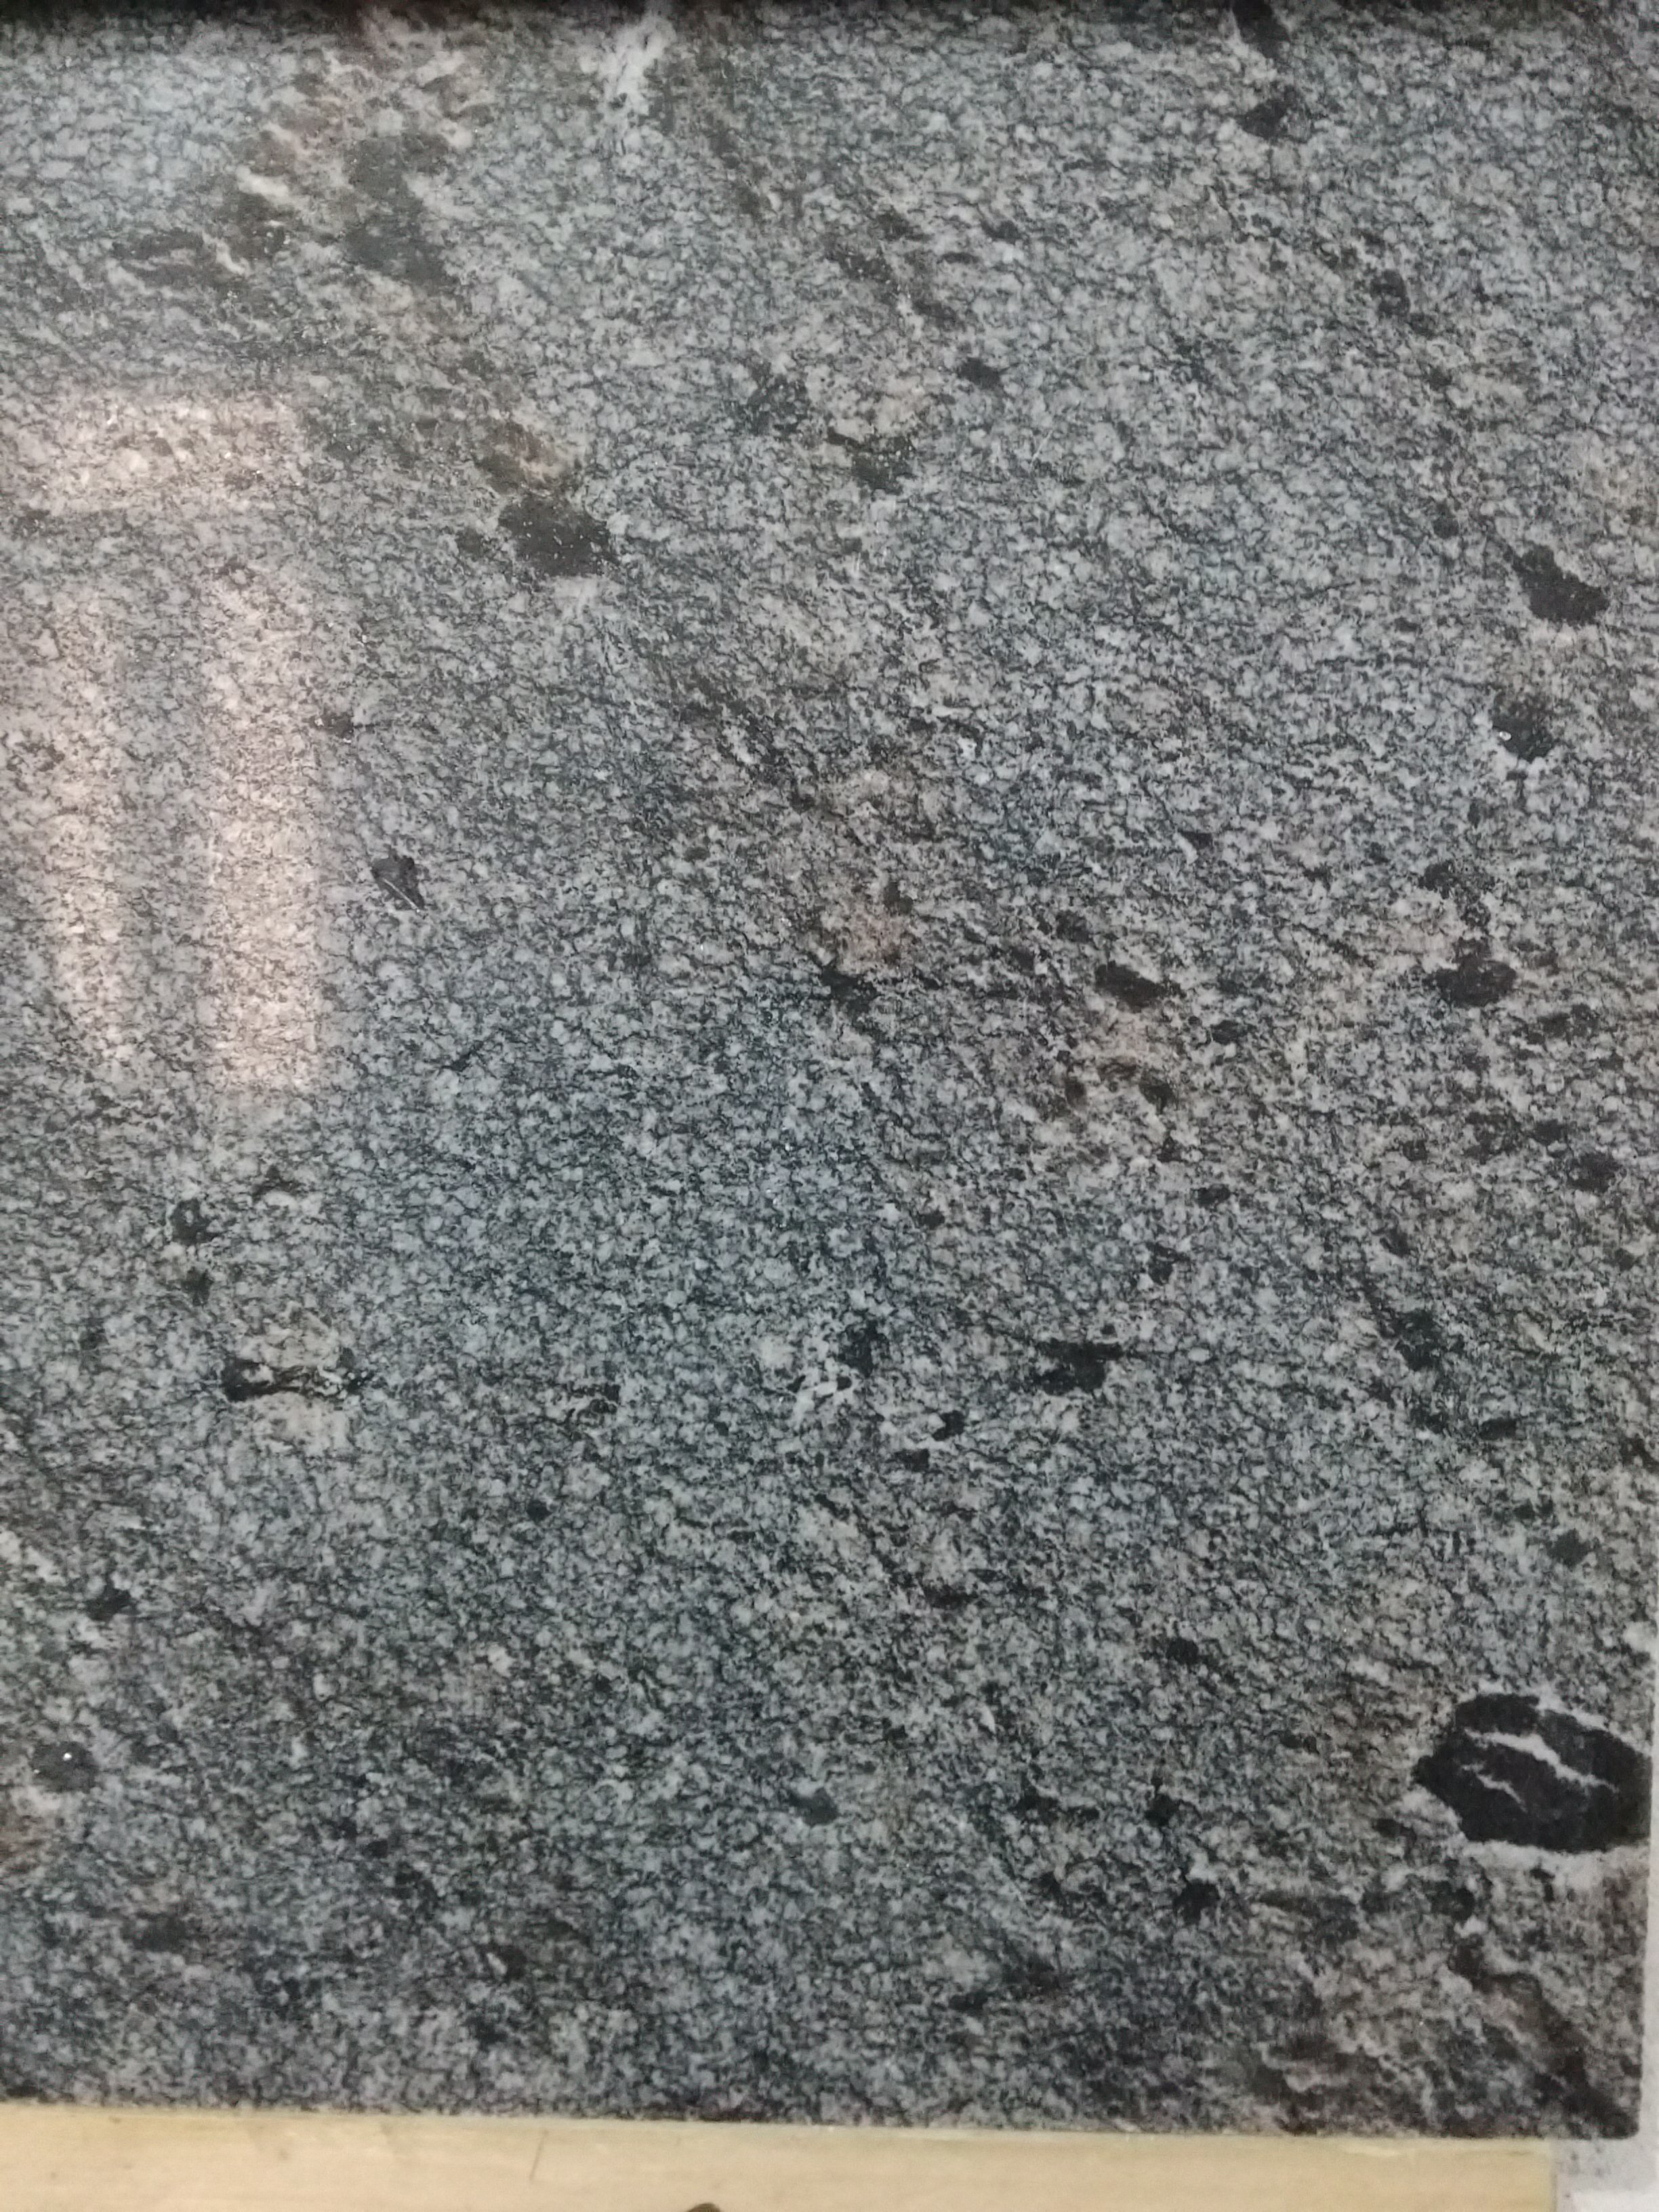 Laiyang black granite